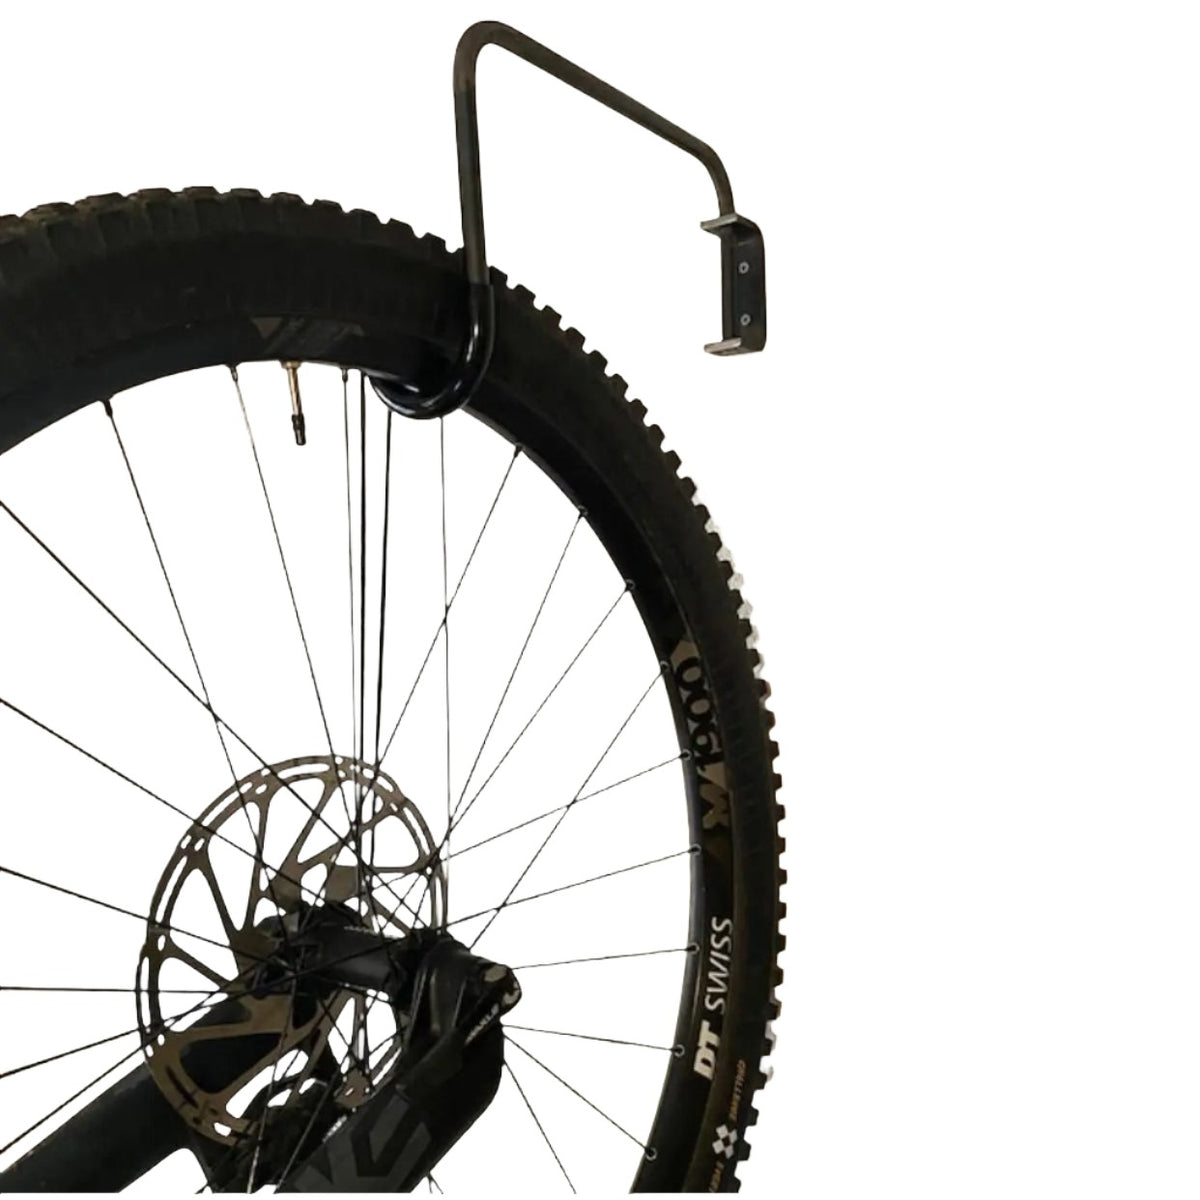 The Logan Wall Mounted Bike Rack Hook Regular Rim Finish Bare/Raw Metal | Industrial Farm Co